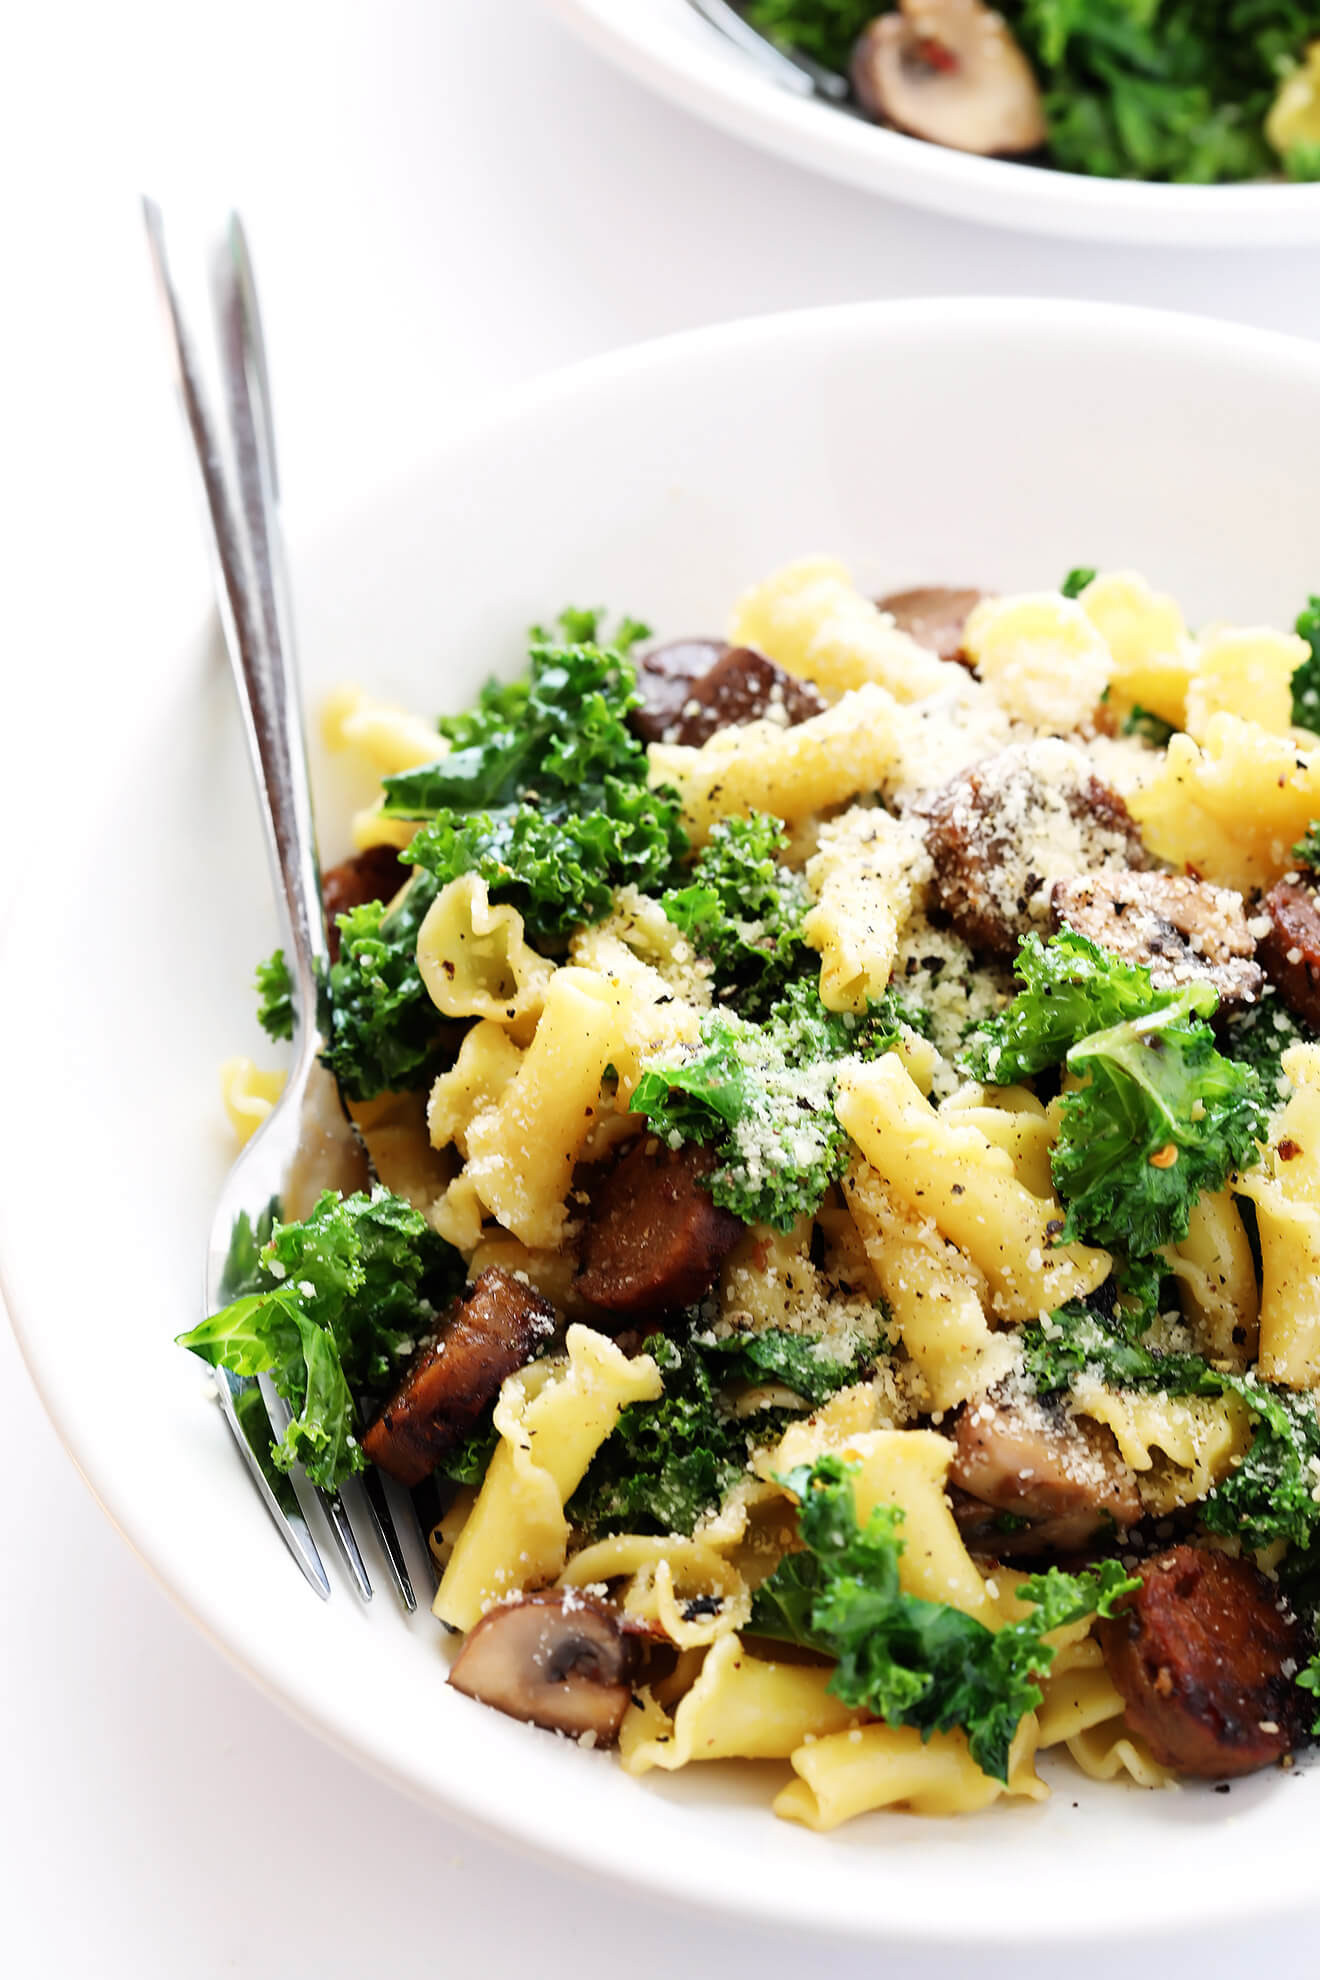 Italian Sausage And Pasta Recipes
 Pasta with Italian Sausage Kale and Mushrooms